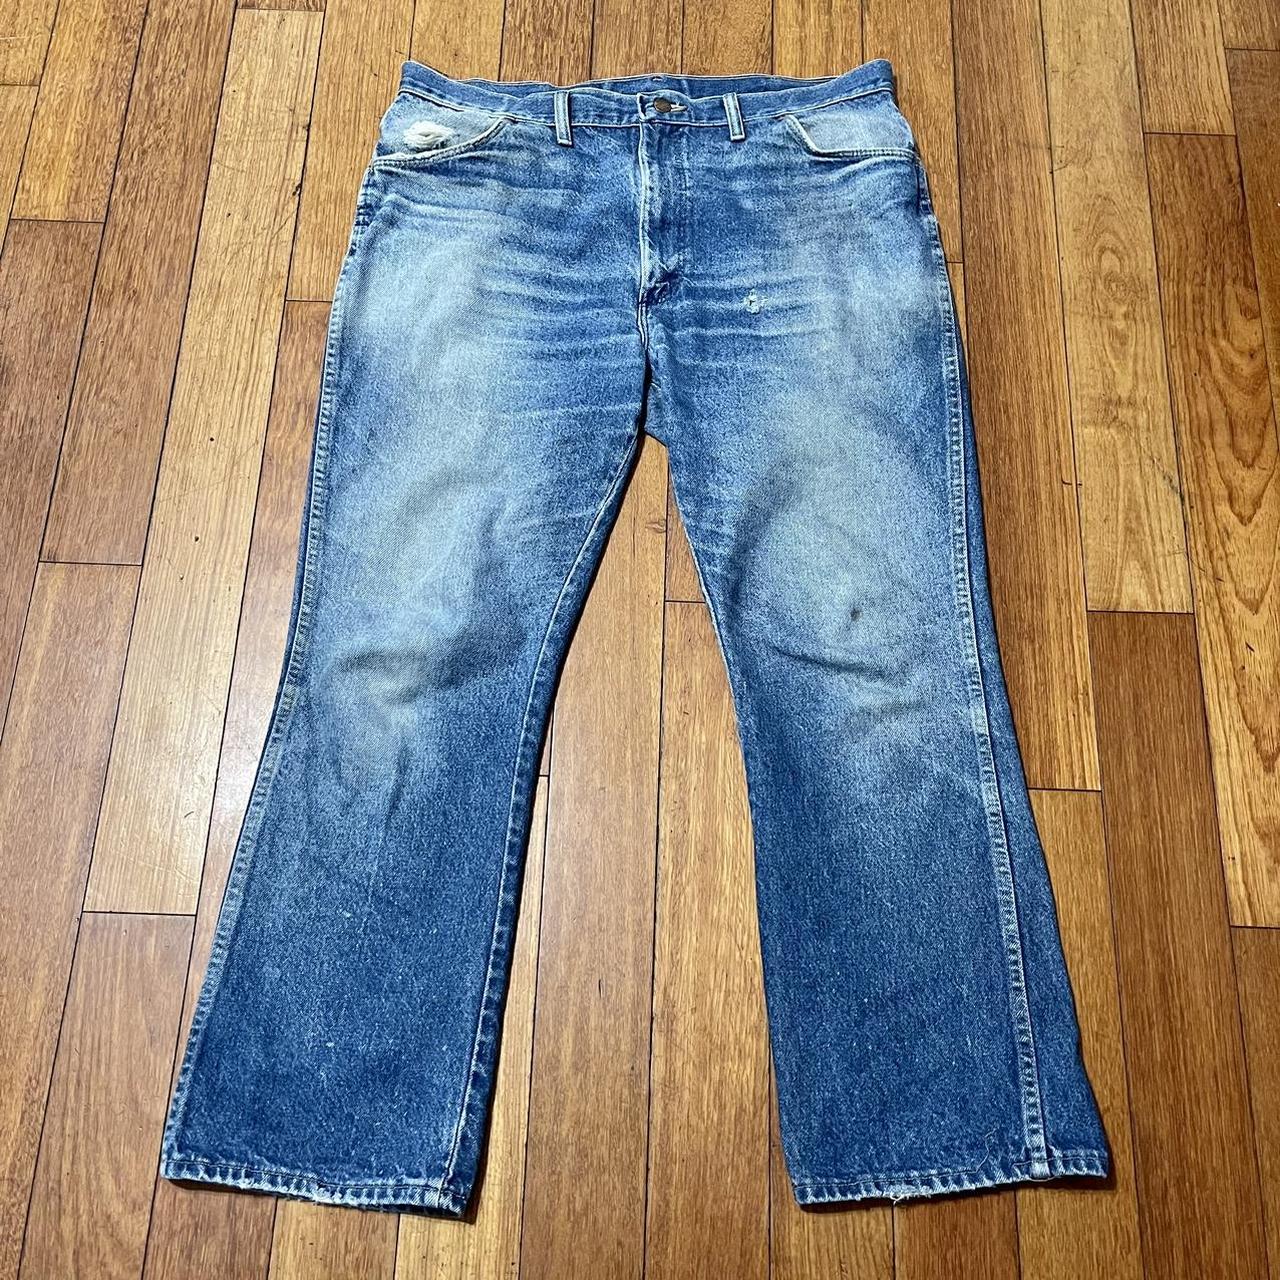 Vintage 60s 70s Rustler Jeans Denim Talon Zipper Made in USA Men's